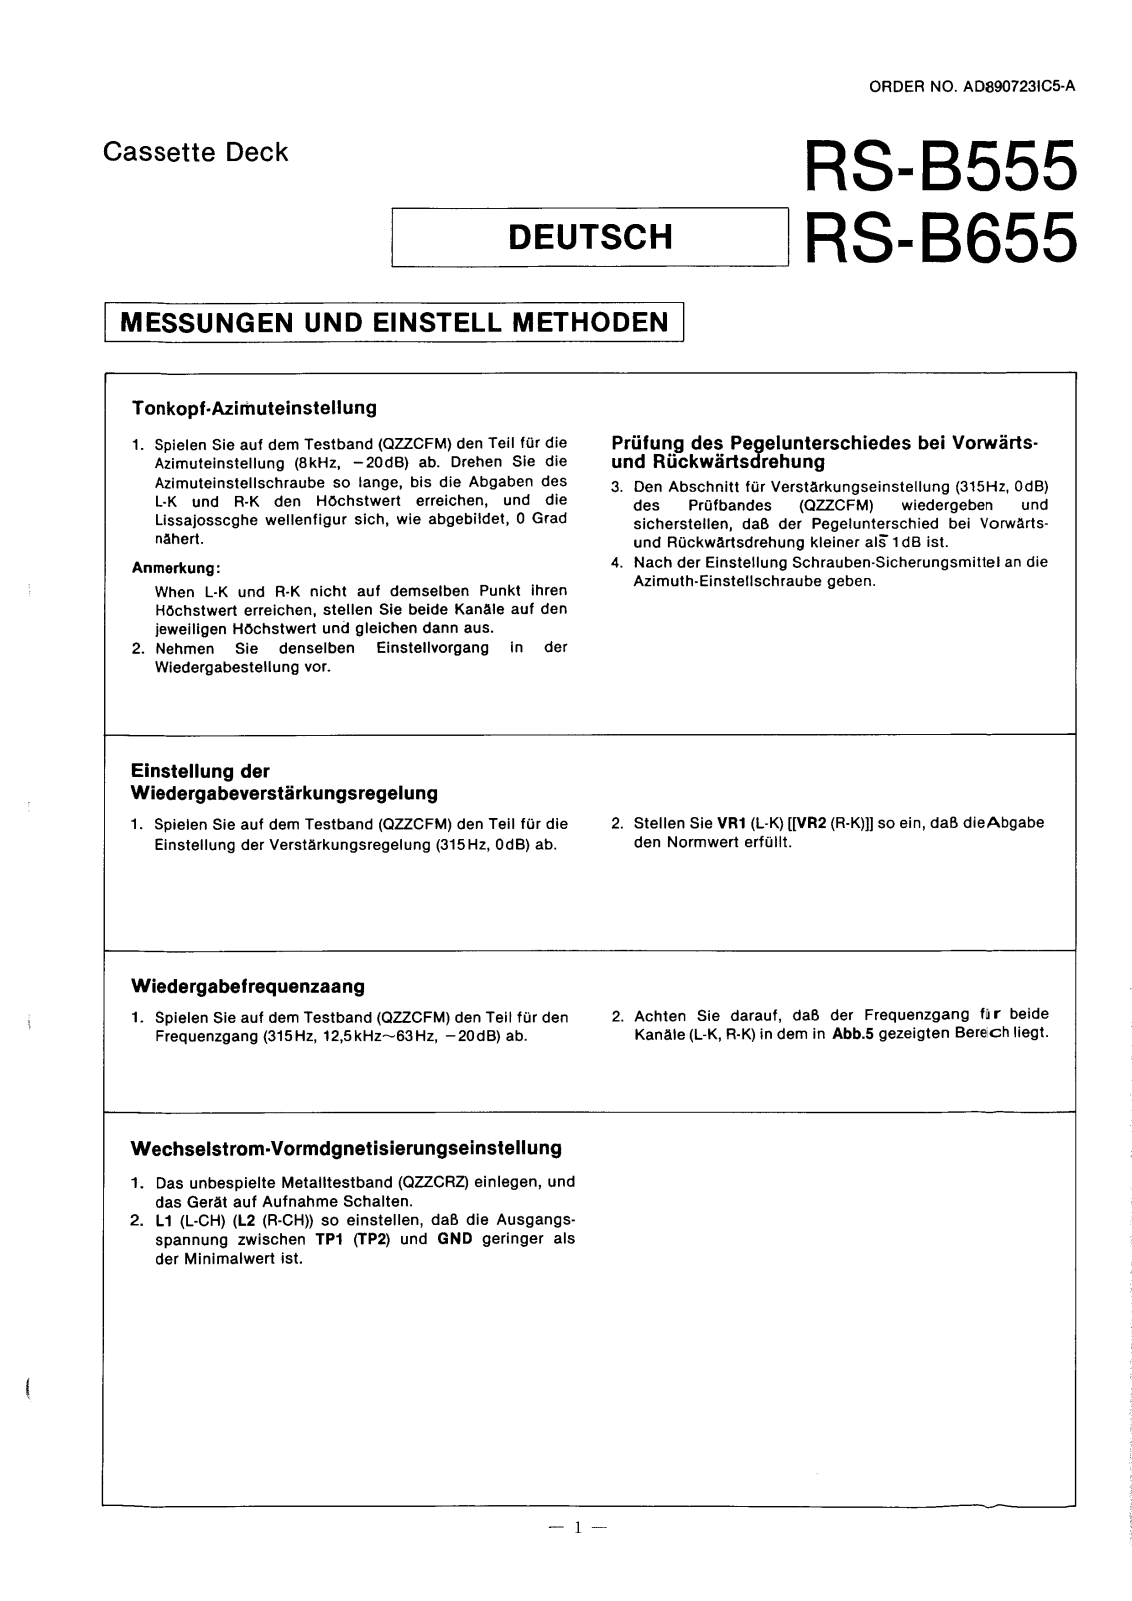 Technics RS-B555, RS-B655 Service Manual